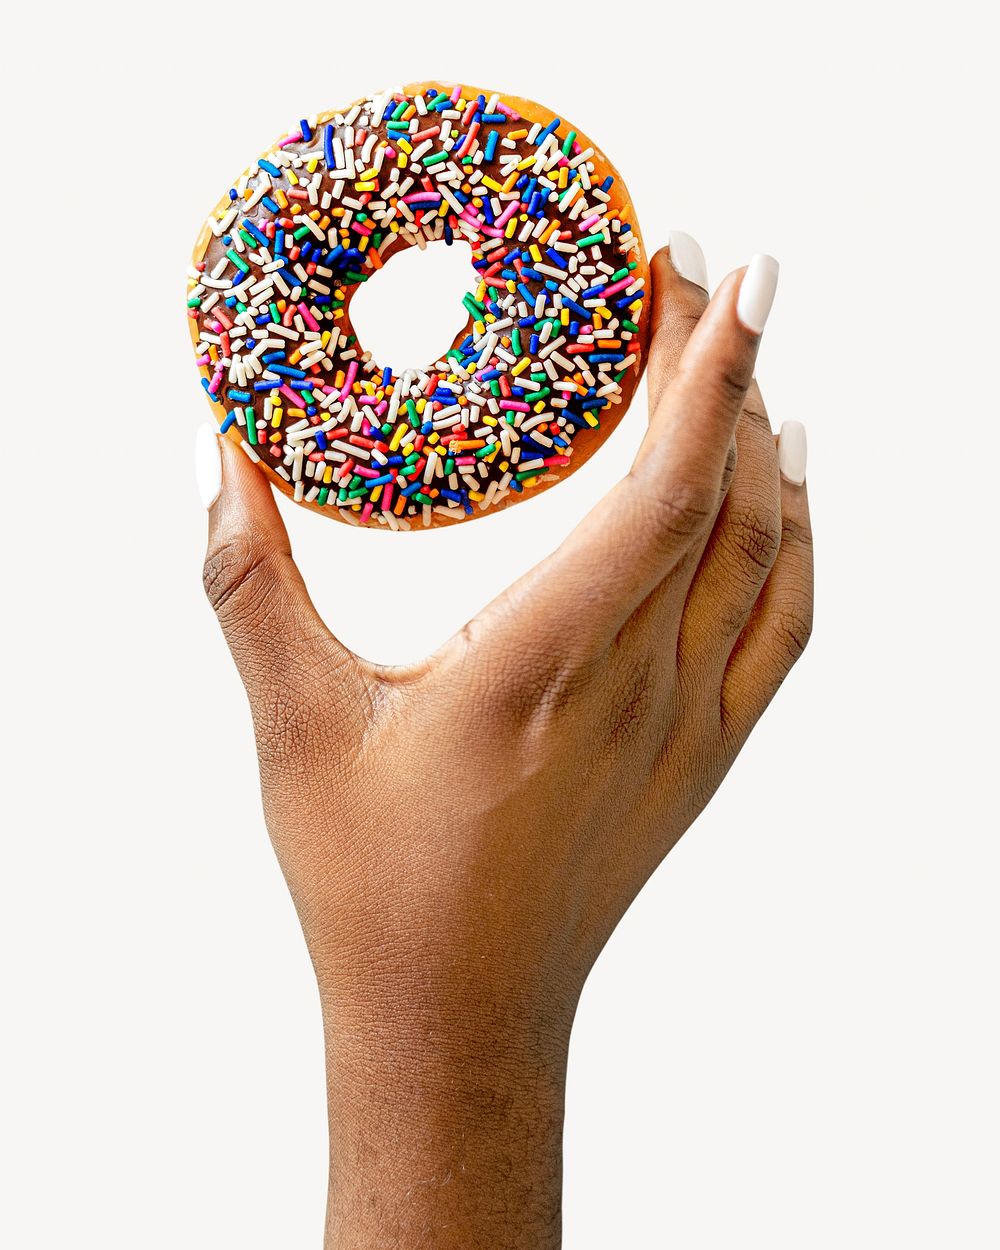 Hand holding donut image